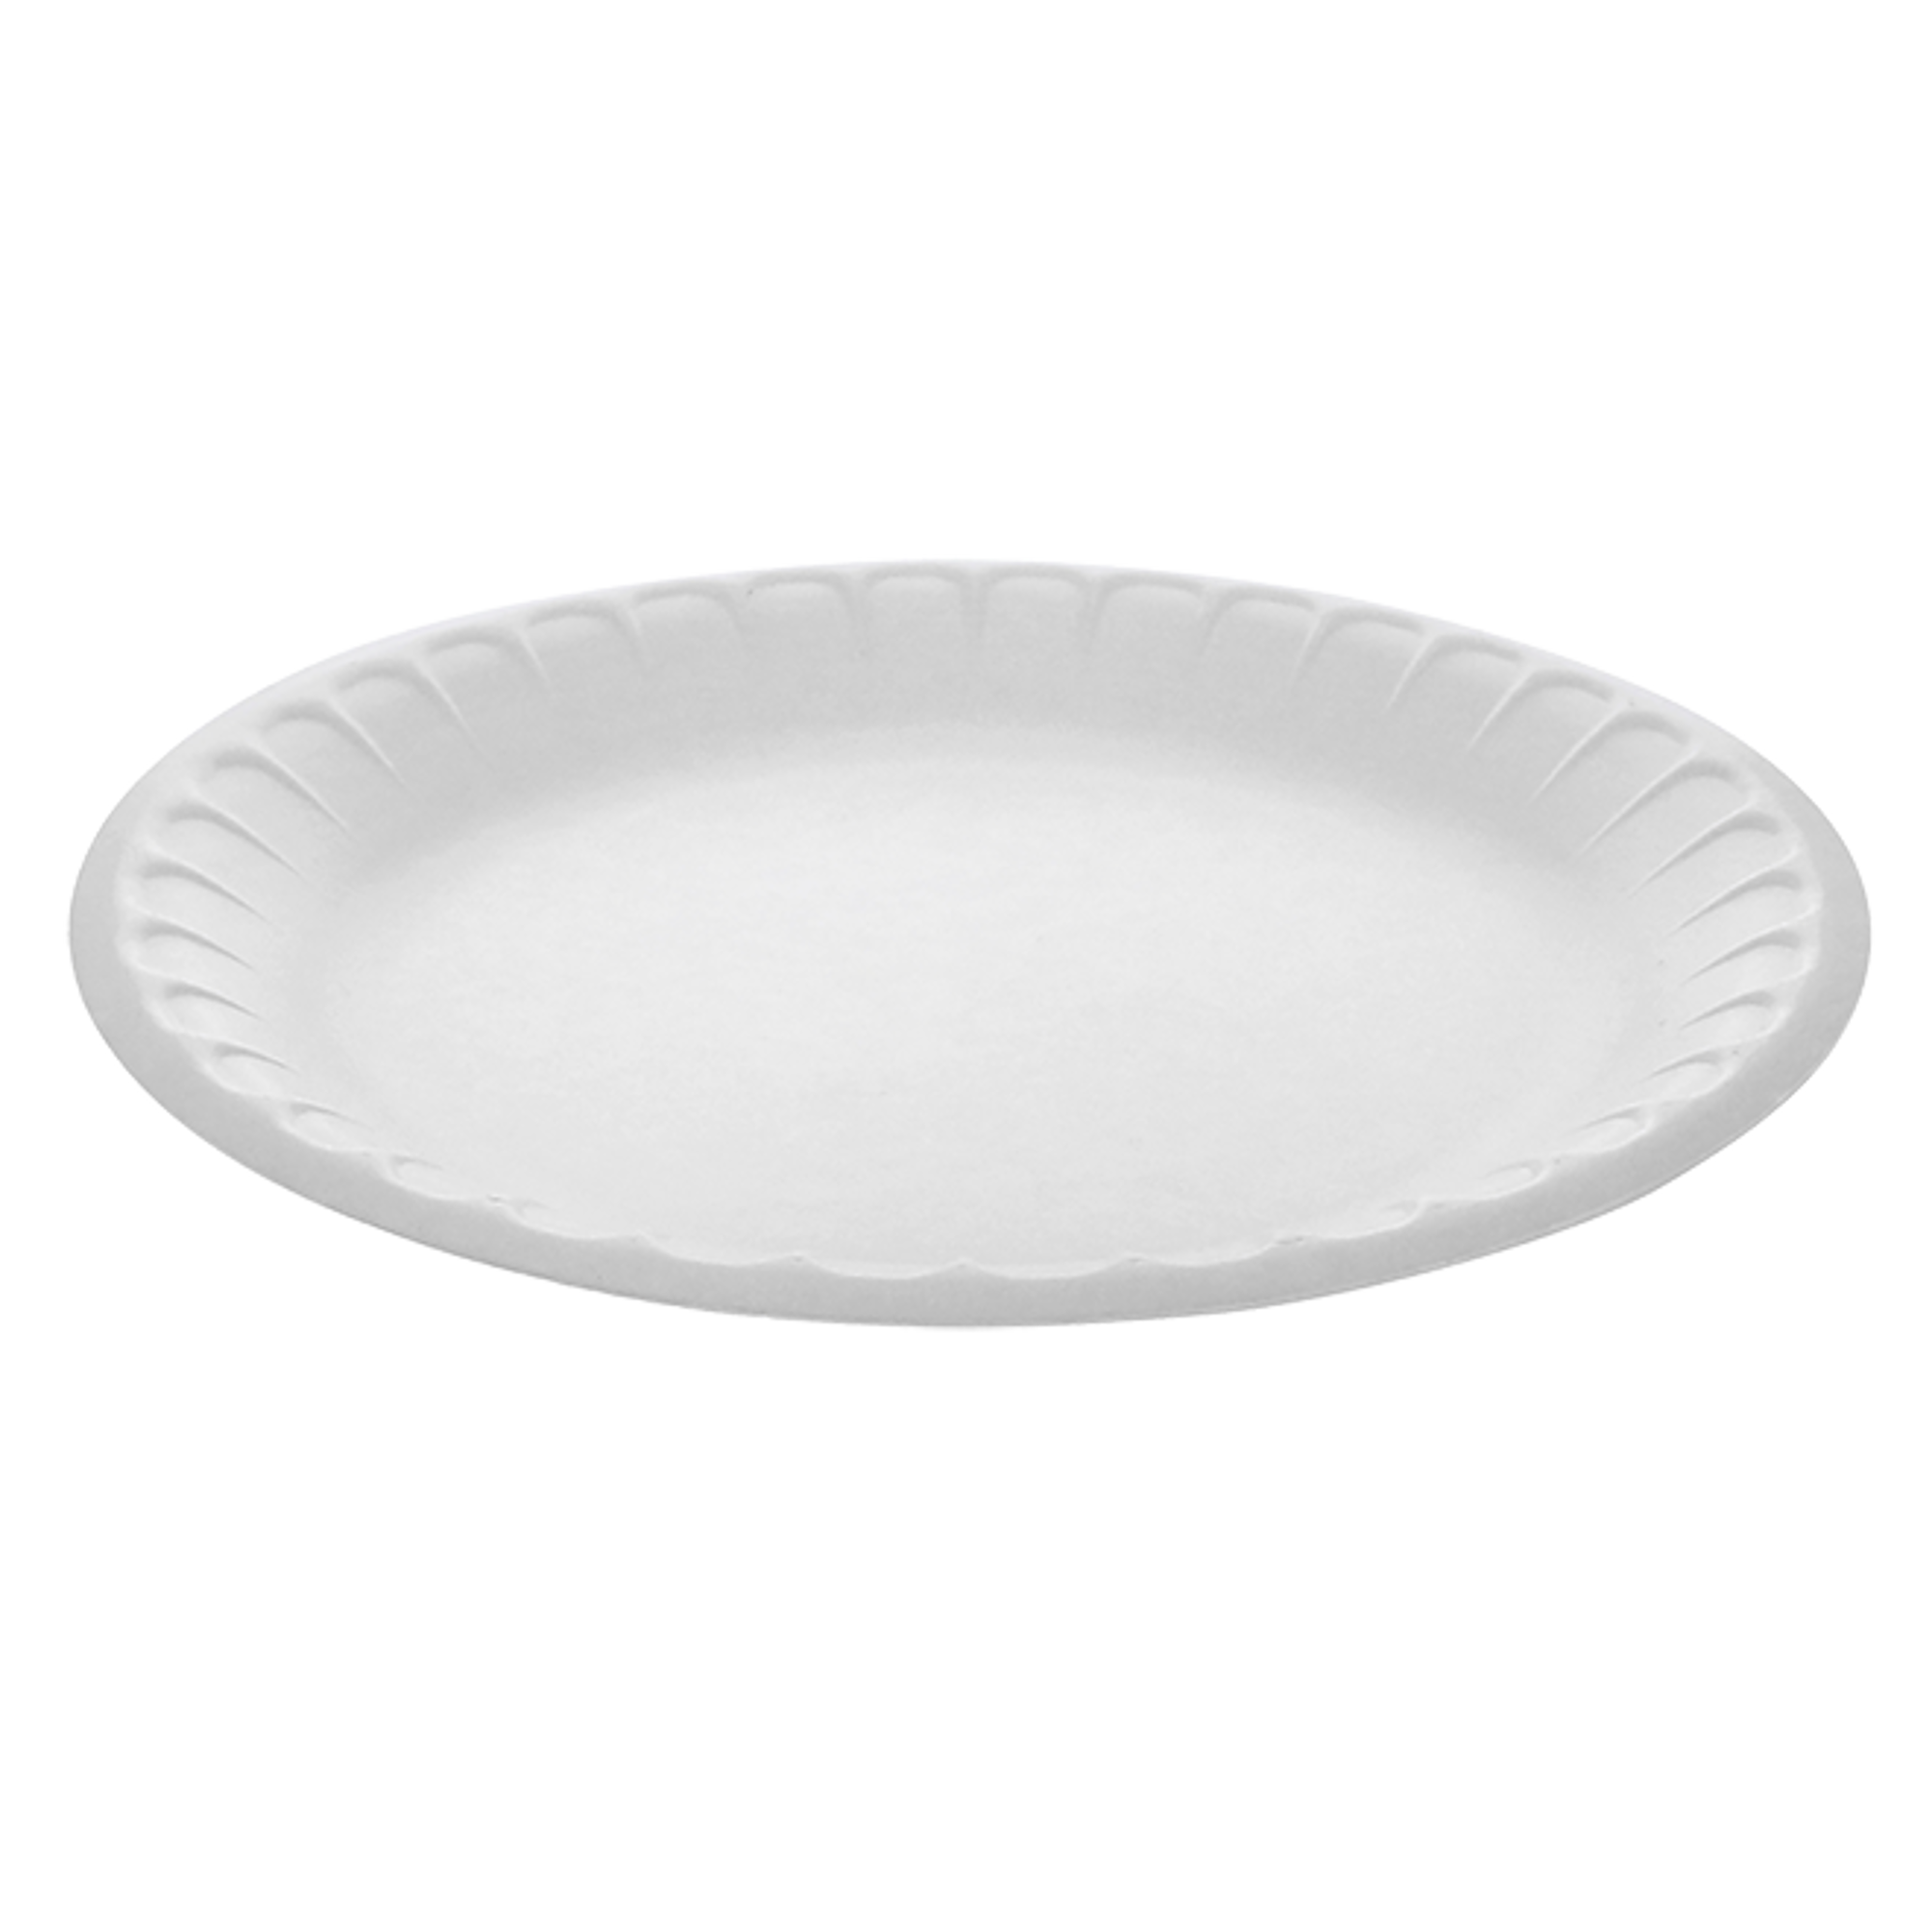 Pactiv Laminated Foam Dinnerware, Plate, 9 Dia, Black, 500/Carton